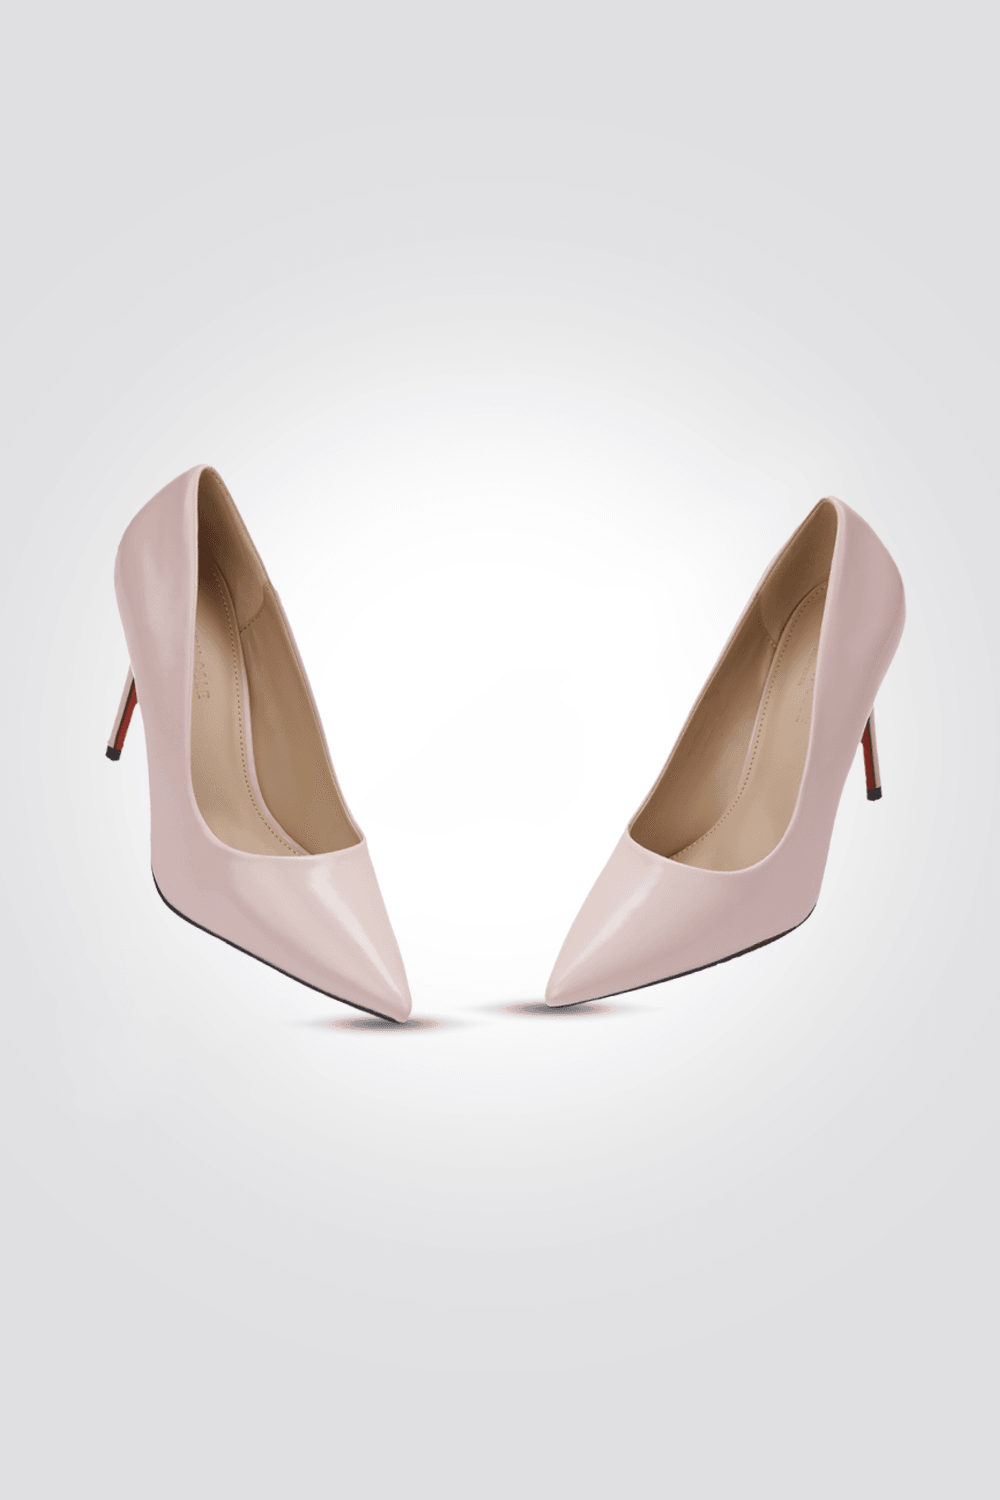 KENNETH COLE - נעל עקב לקה STILETTO HEEL בצבע ניוד - MASHBIR//365